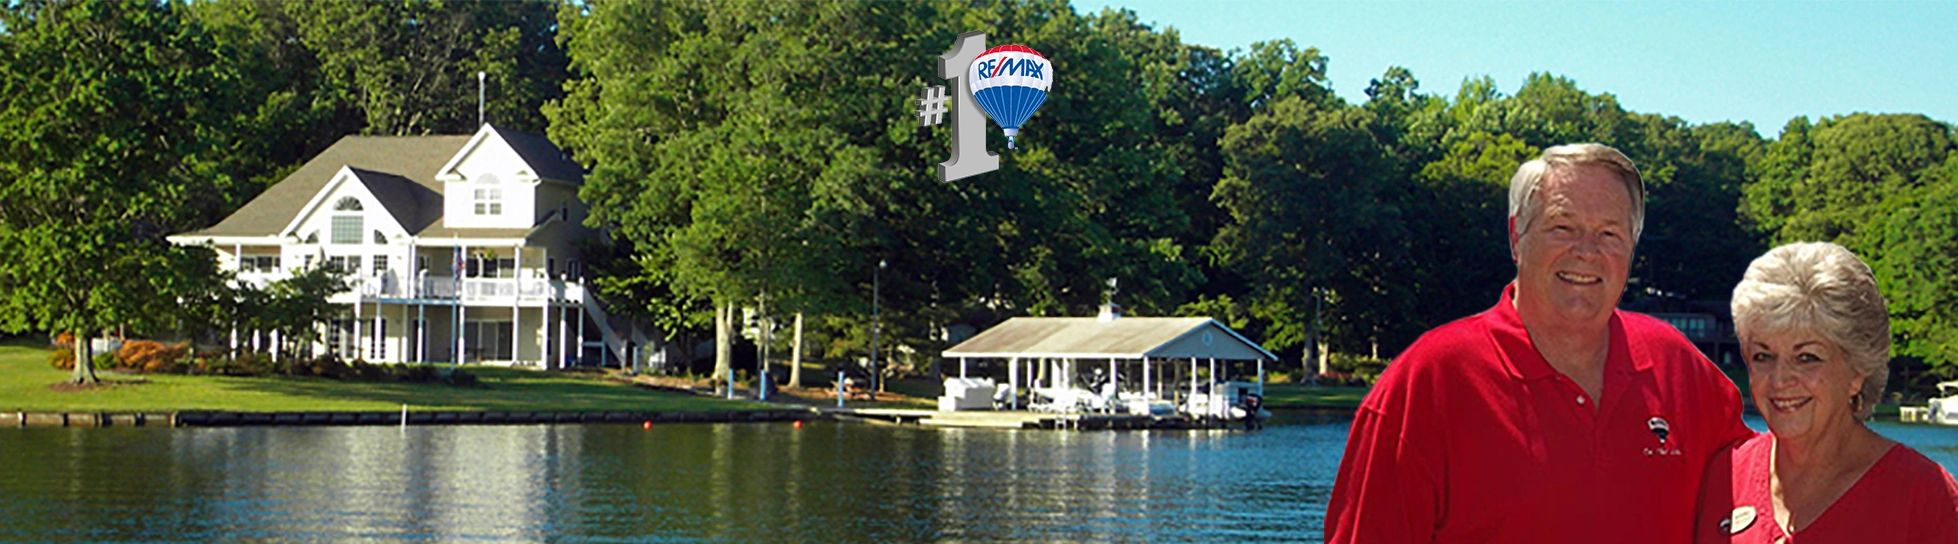 Lake Gaston Real Estate Property - RE/MAX ON THE LAKE, Doug & Marcia Kerr, 